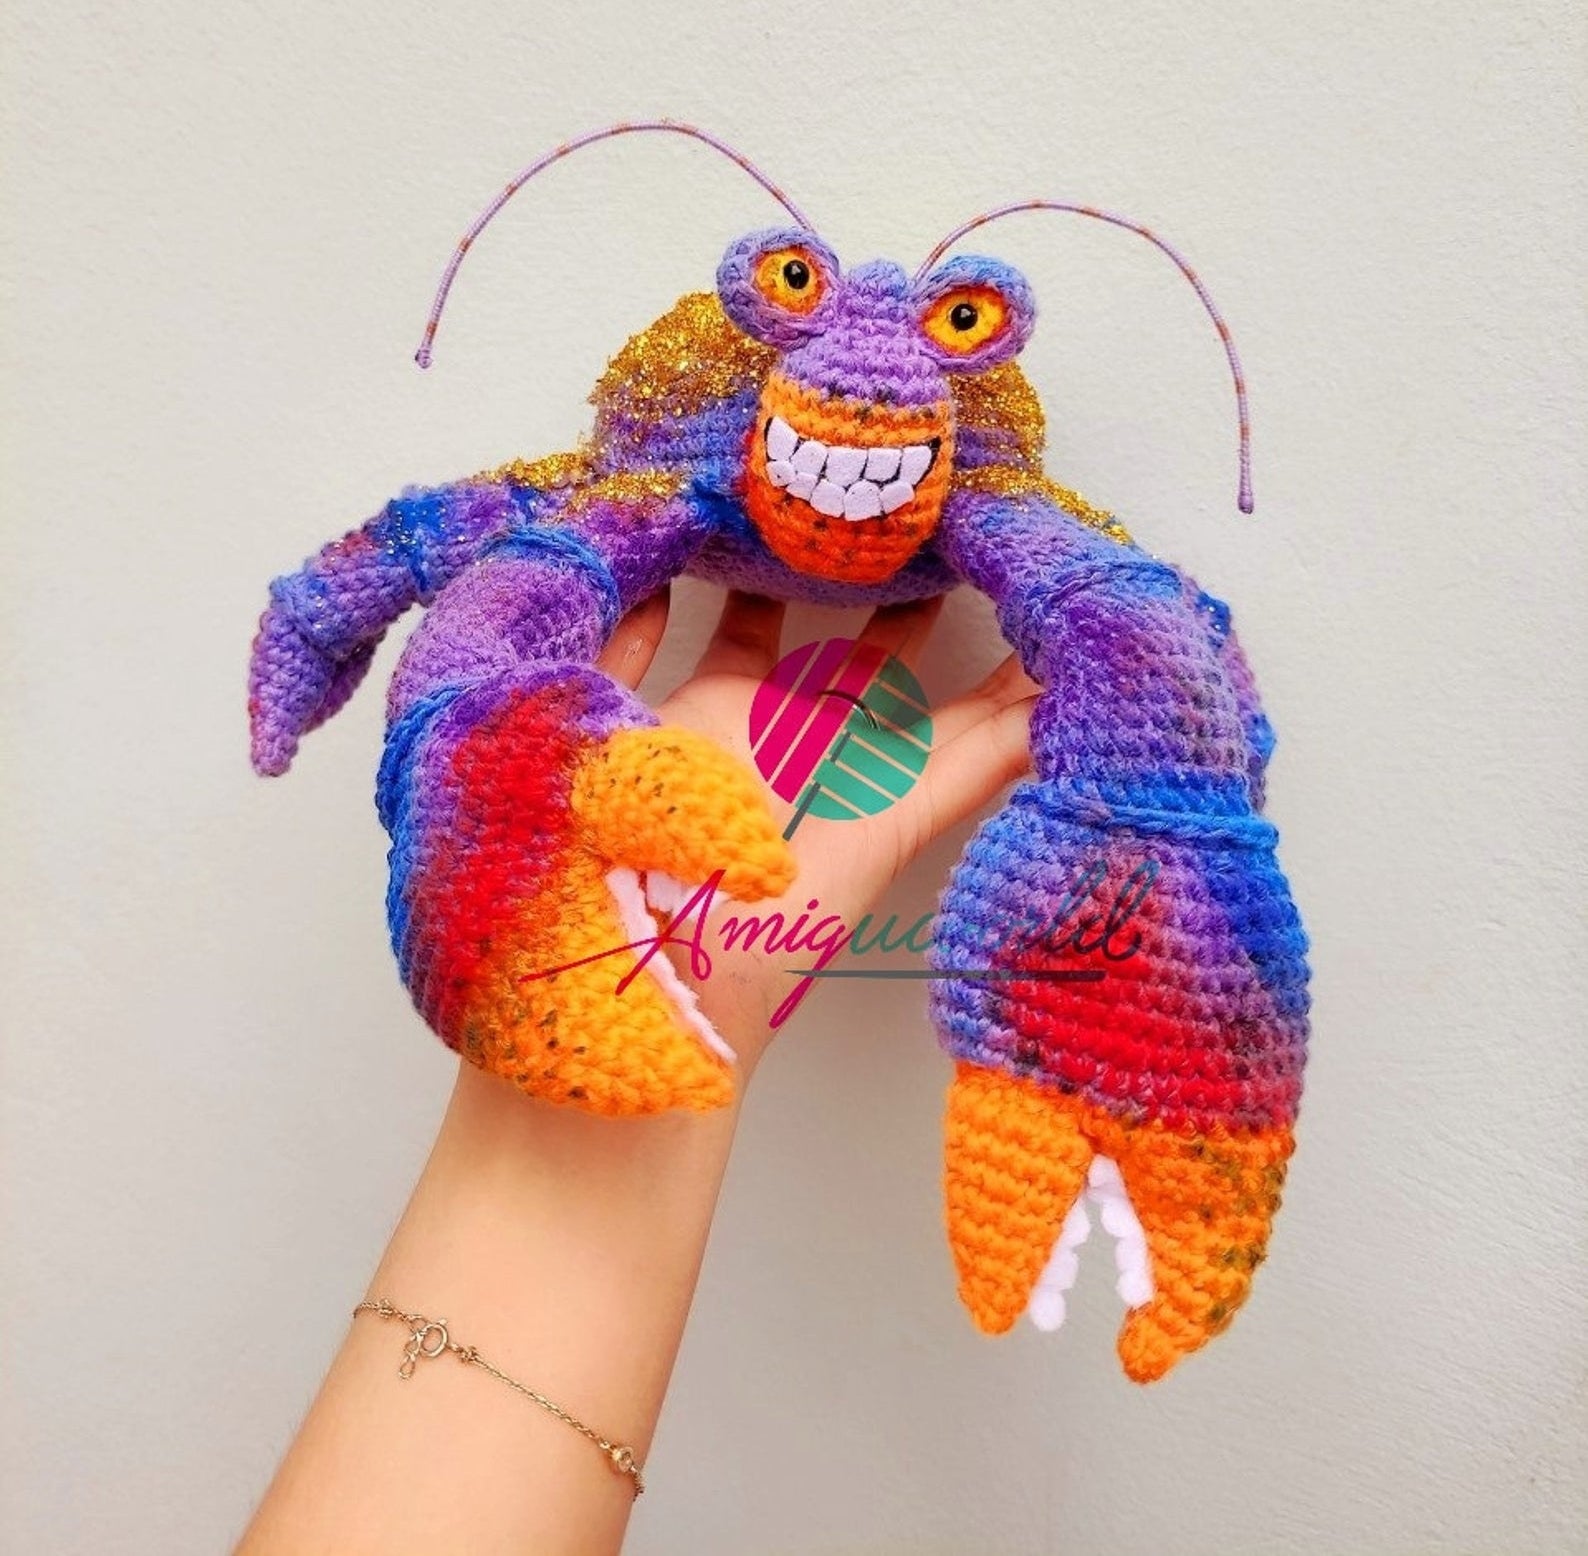 stuffed crocheted lobster shaped like Tamatoa from Moana. It&#x27;s purple, orange, and red.